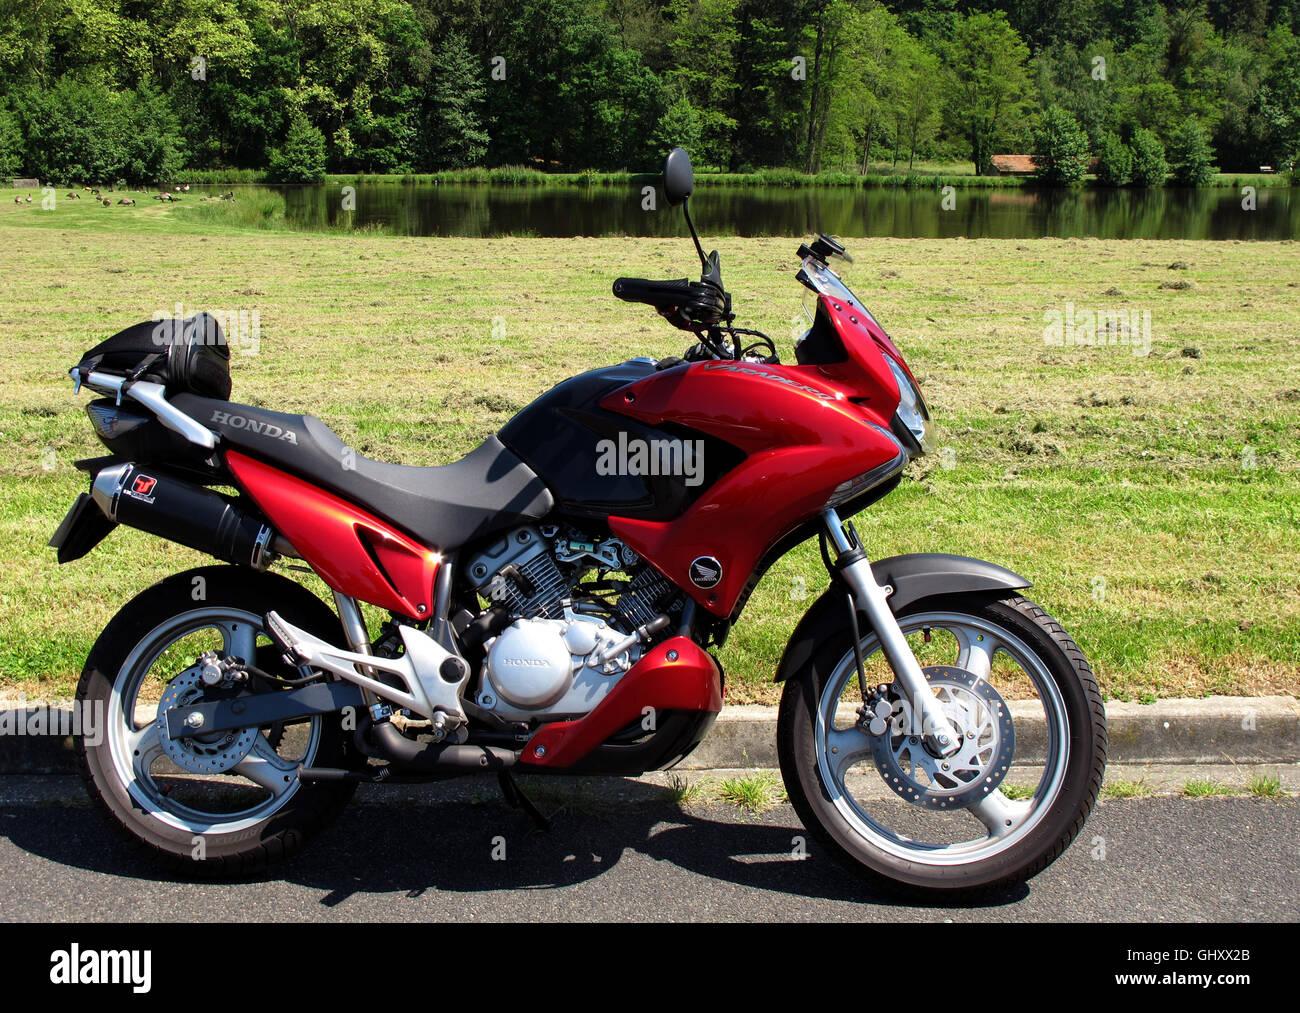 Honda Varadero 125 motorcycle in country, made in Japan Stock Photo - Alamy